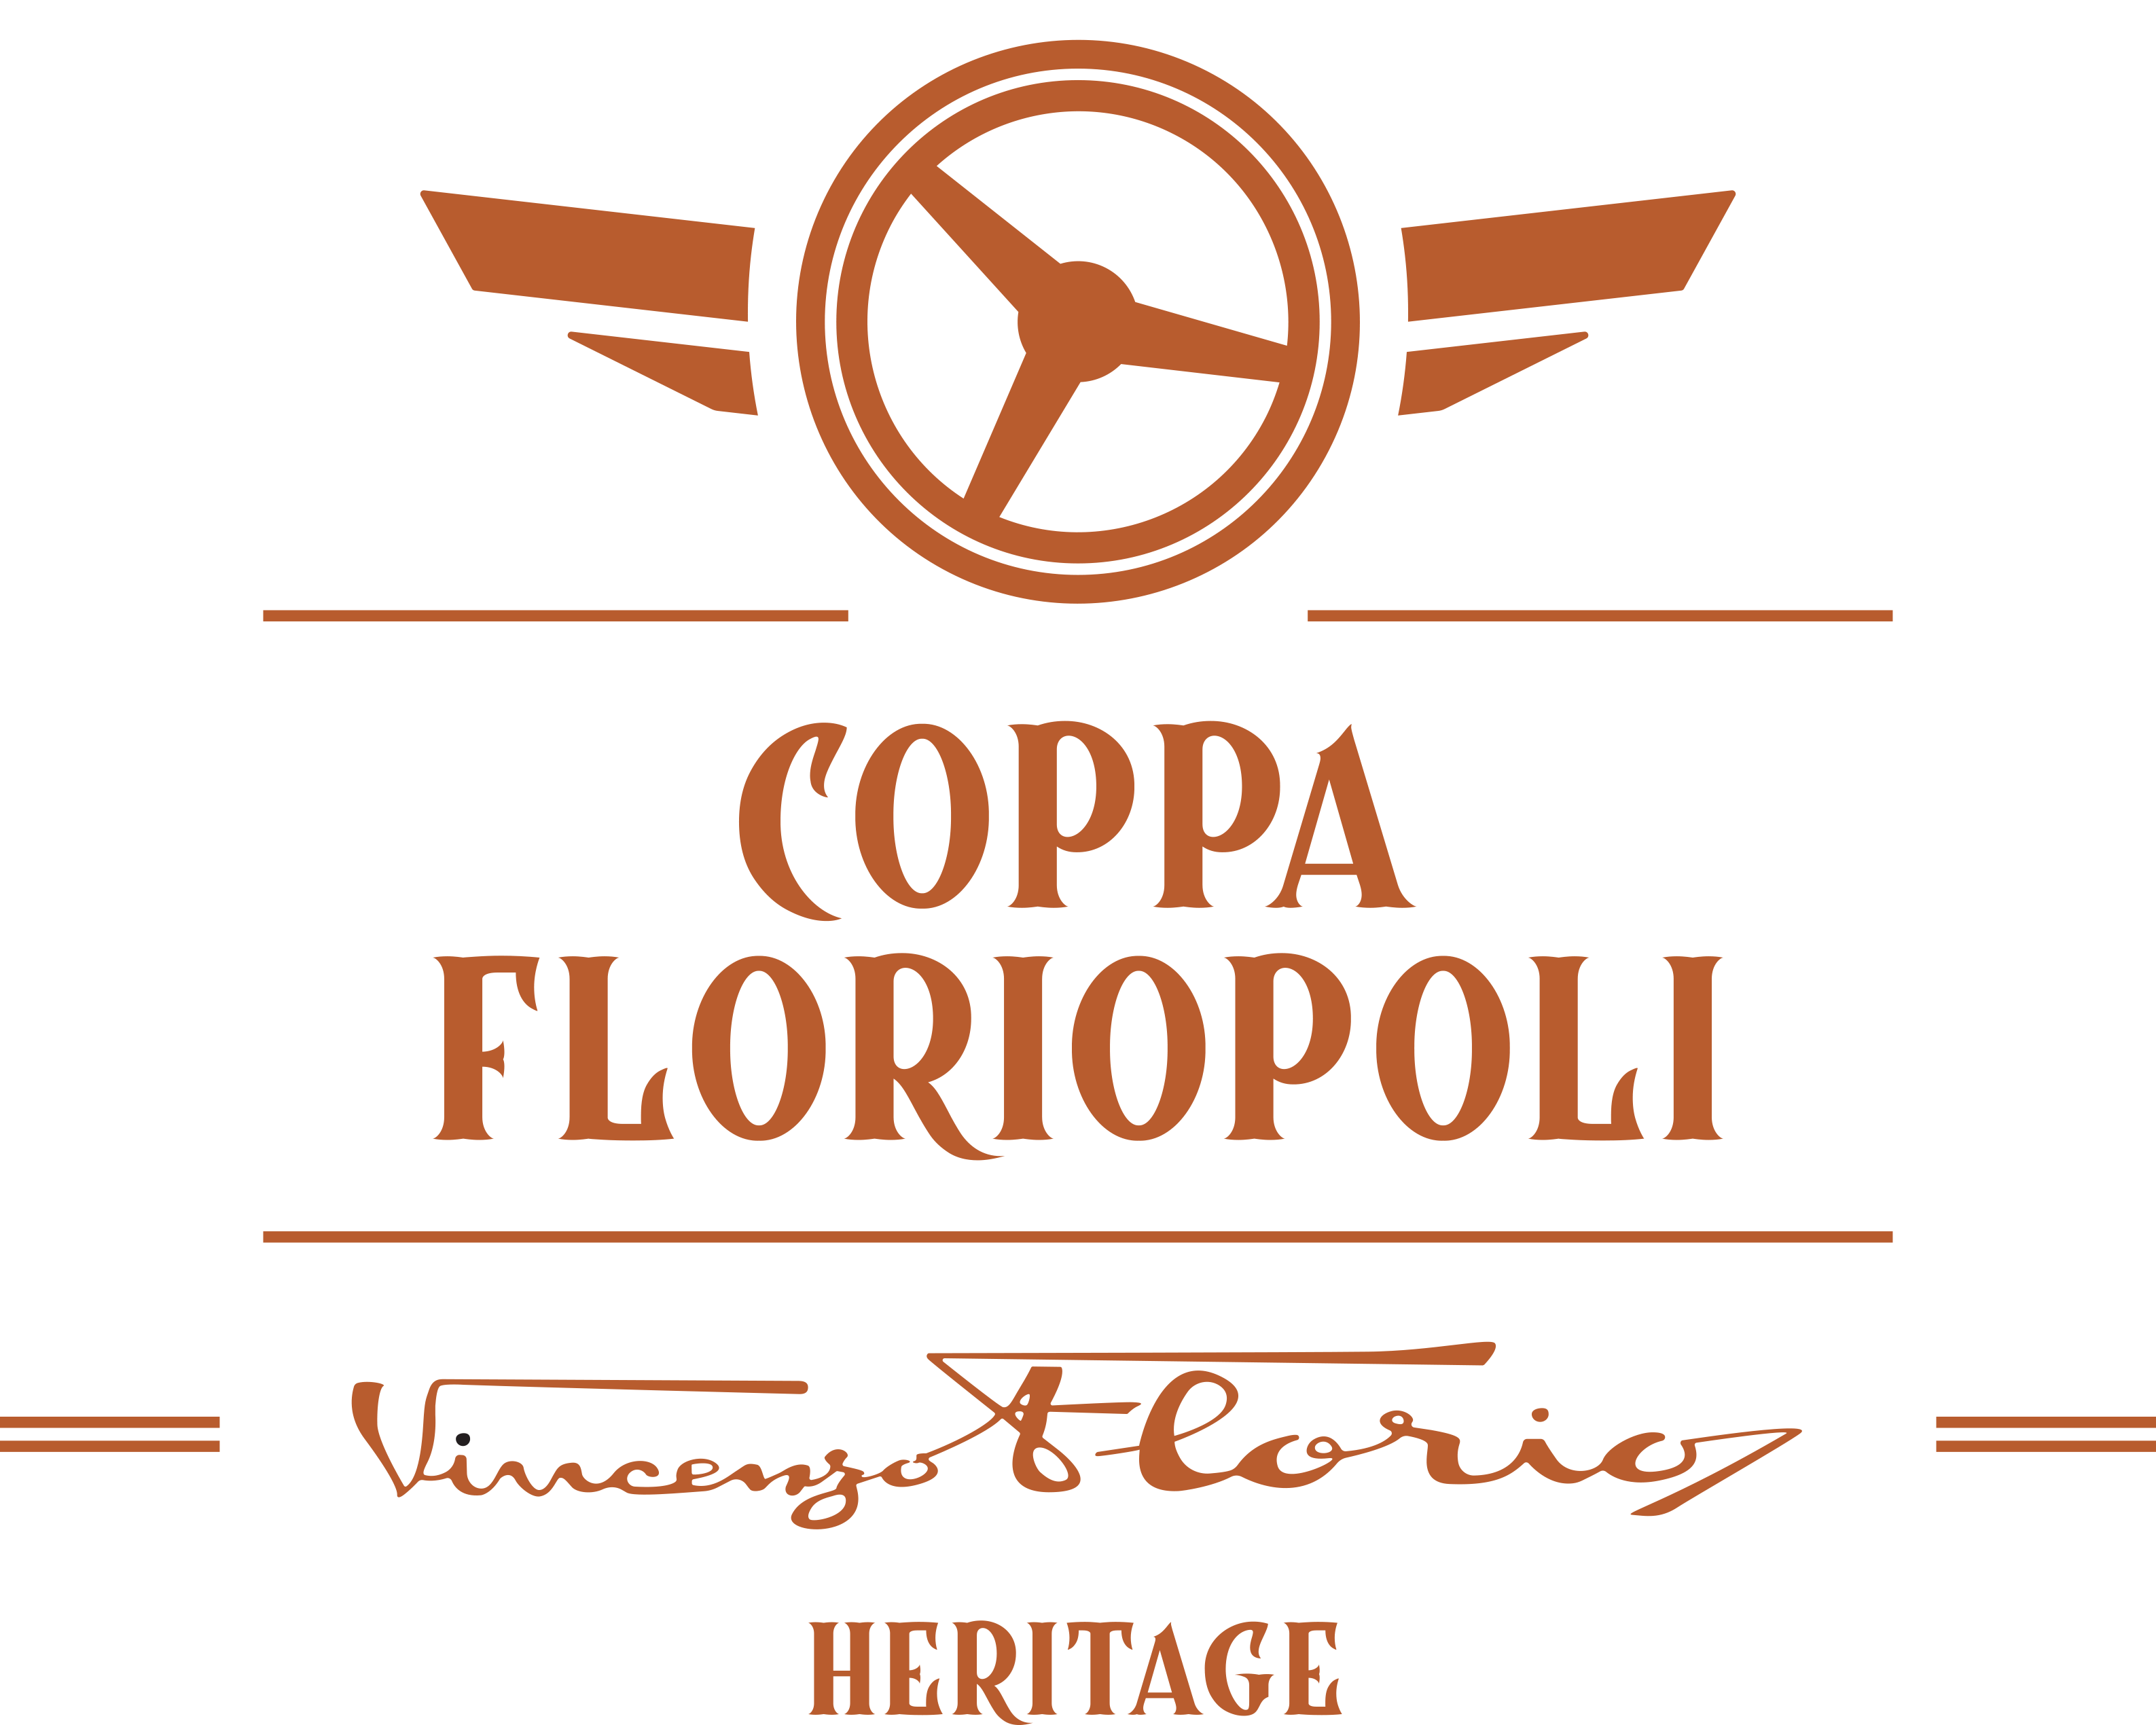 COPPA FLORIOPOLI HERITAGE